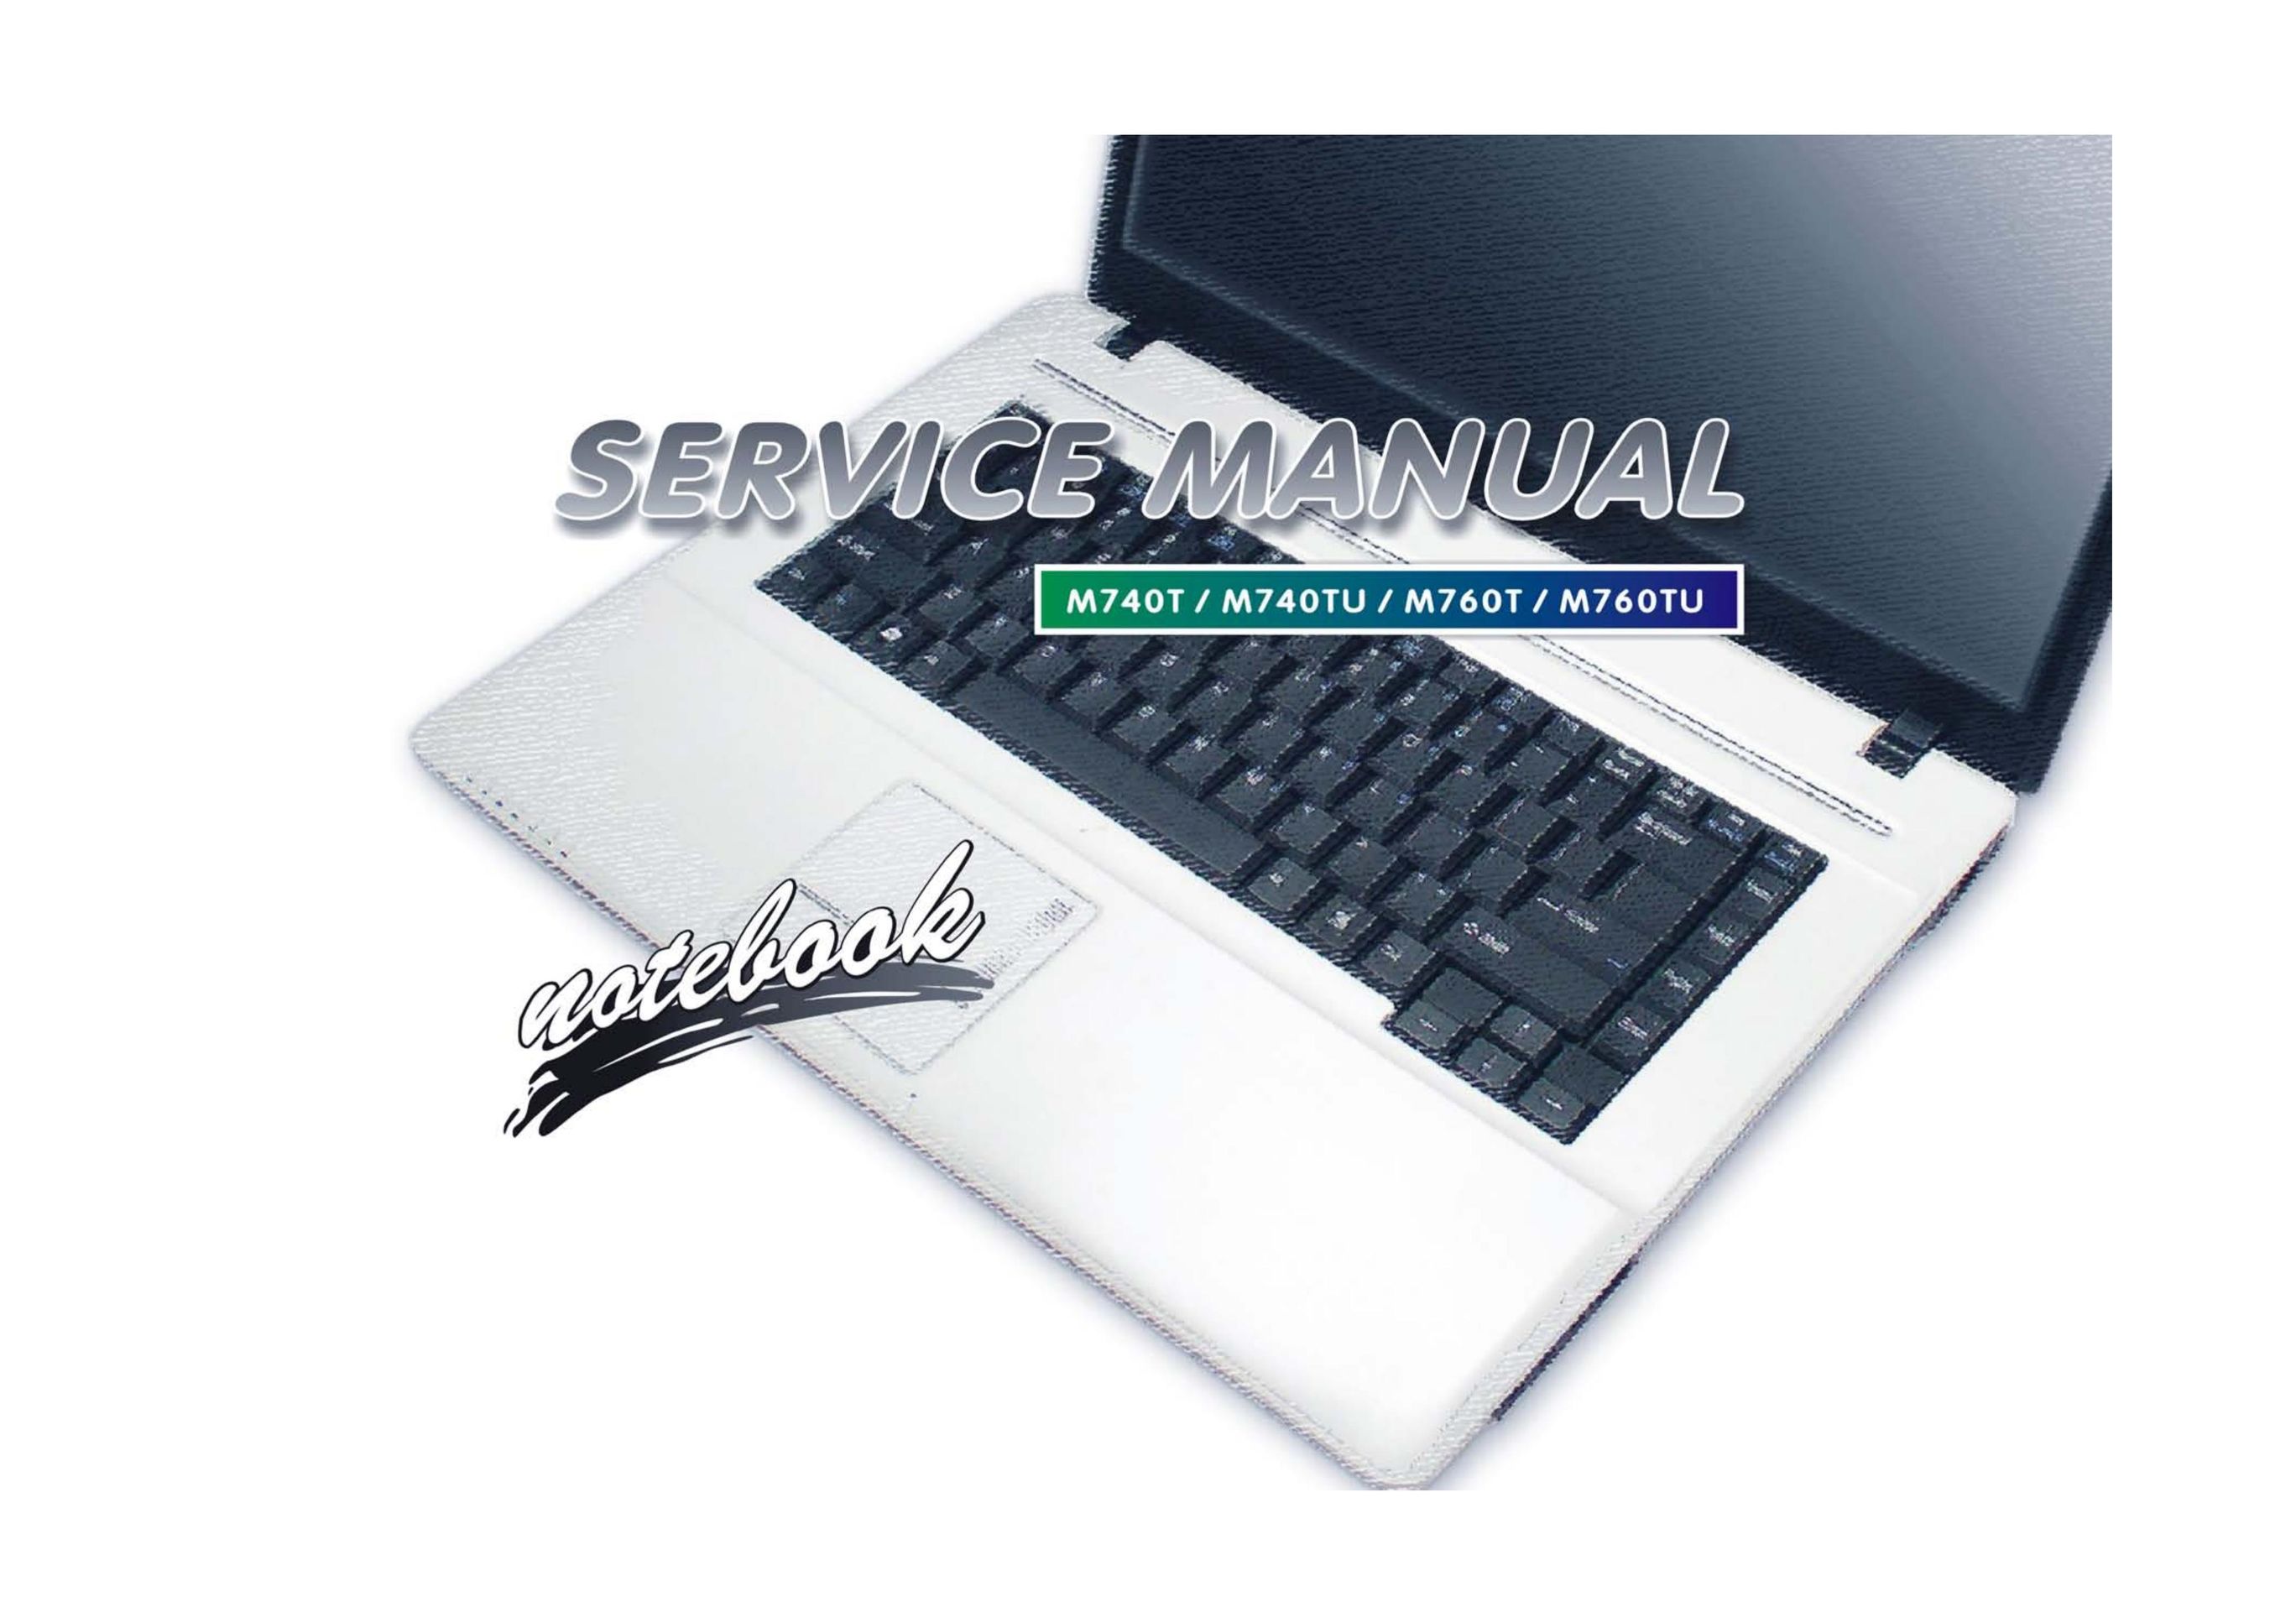 Clevo M760TU Laptop User Manual